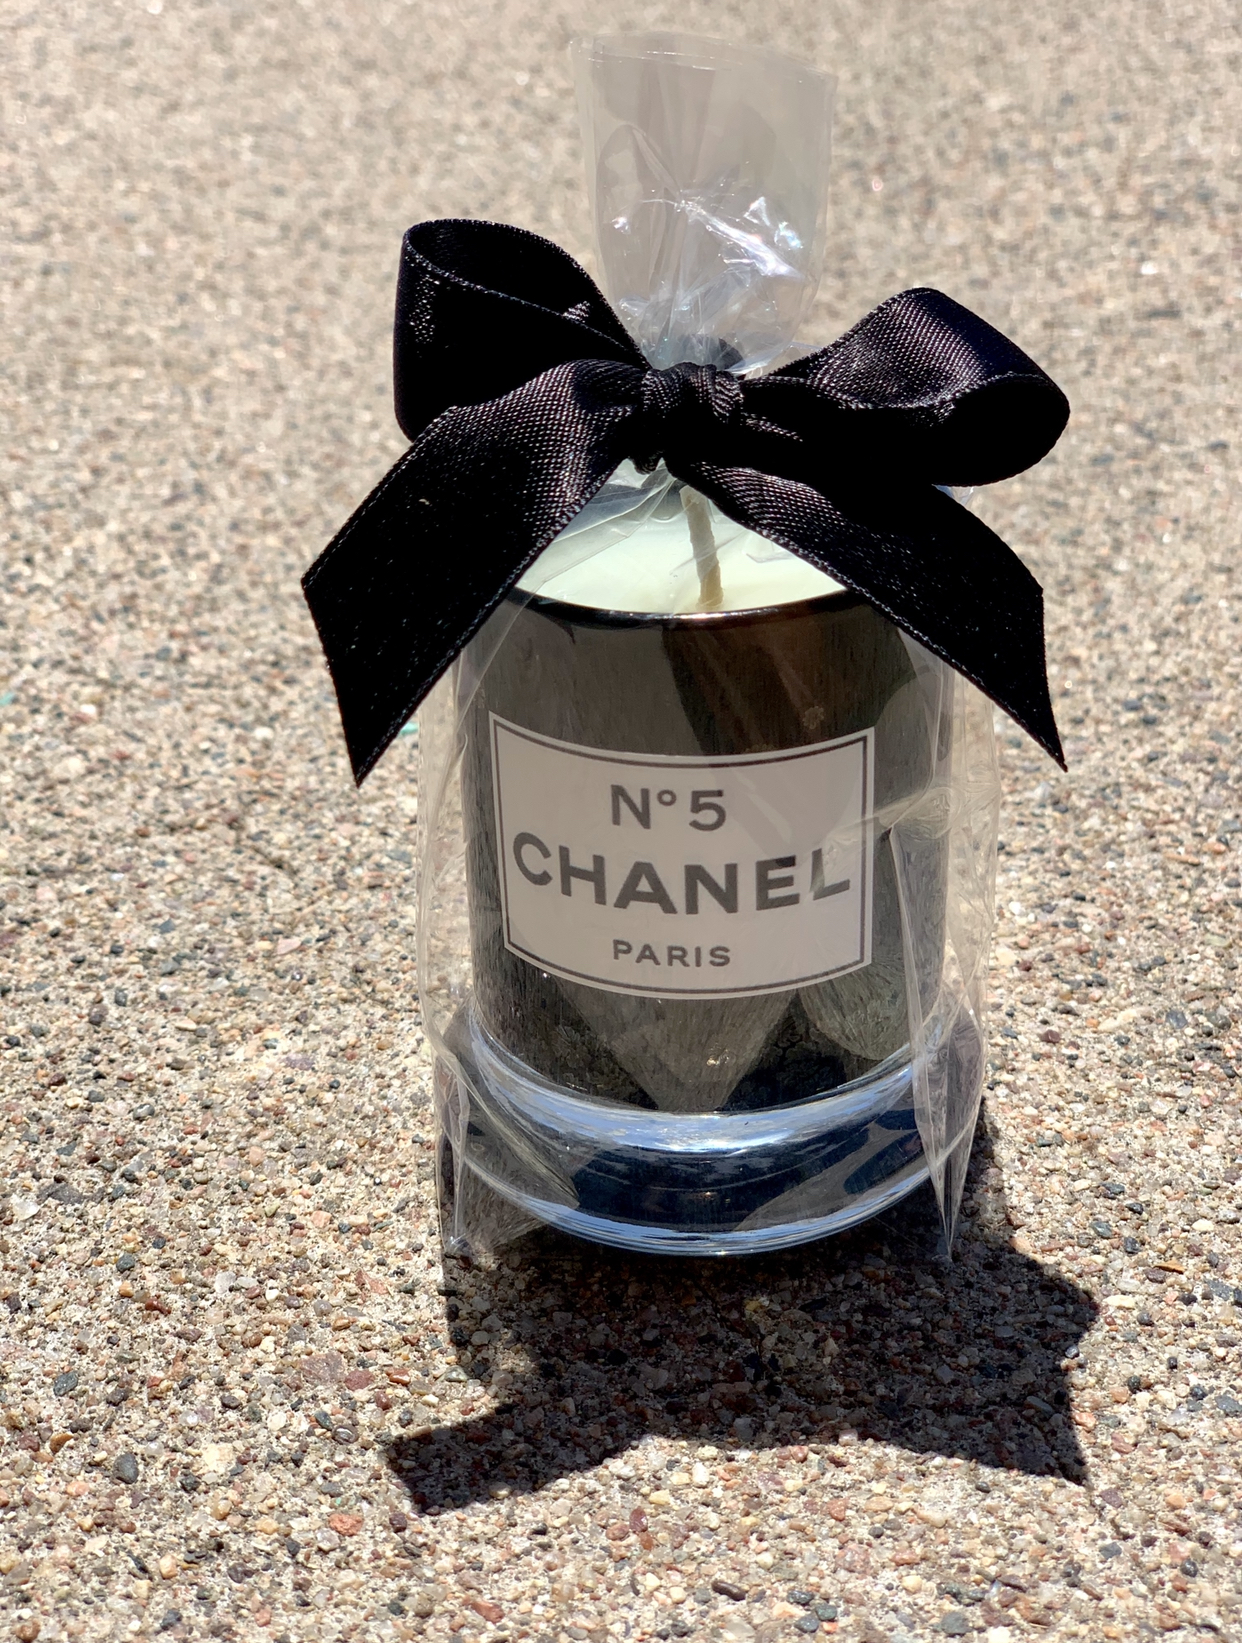 Chanel N5 Candle